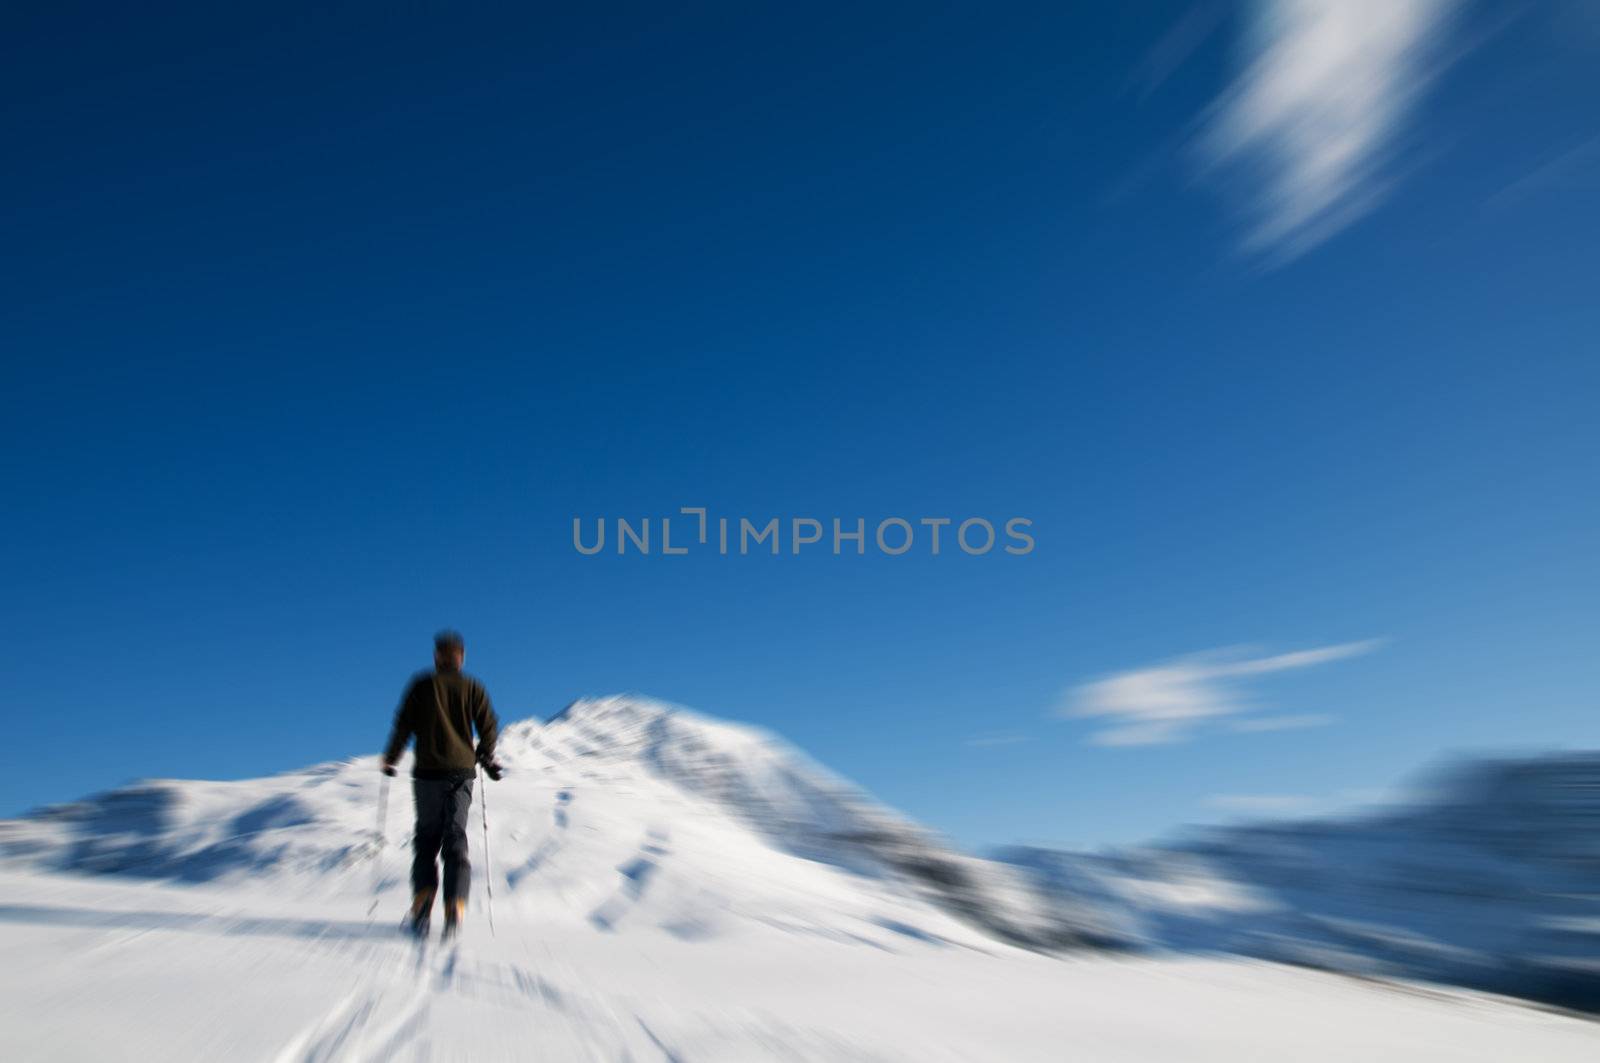 Winter sports - mountain climbing. Motion blurred